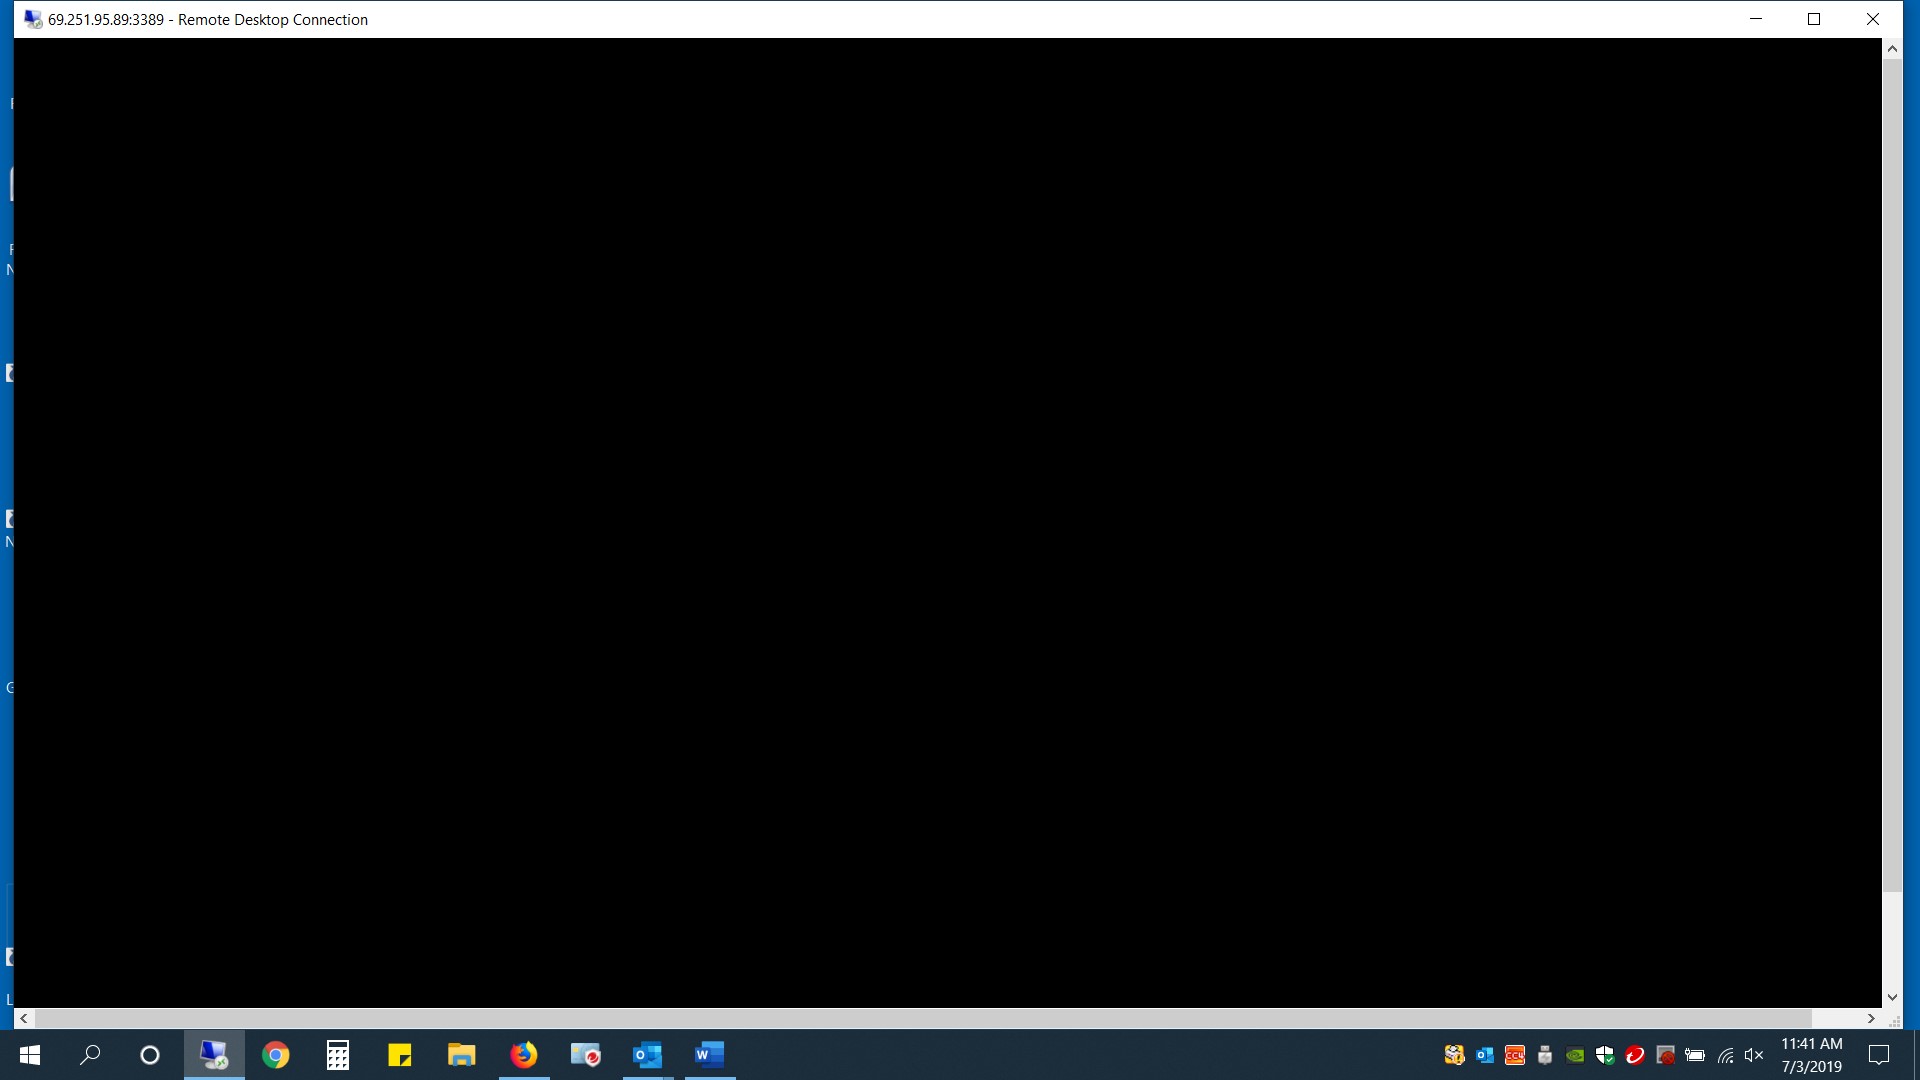 Remote Desktop black screen - Microsoft Community